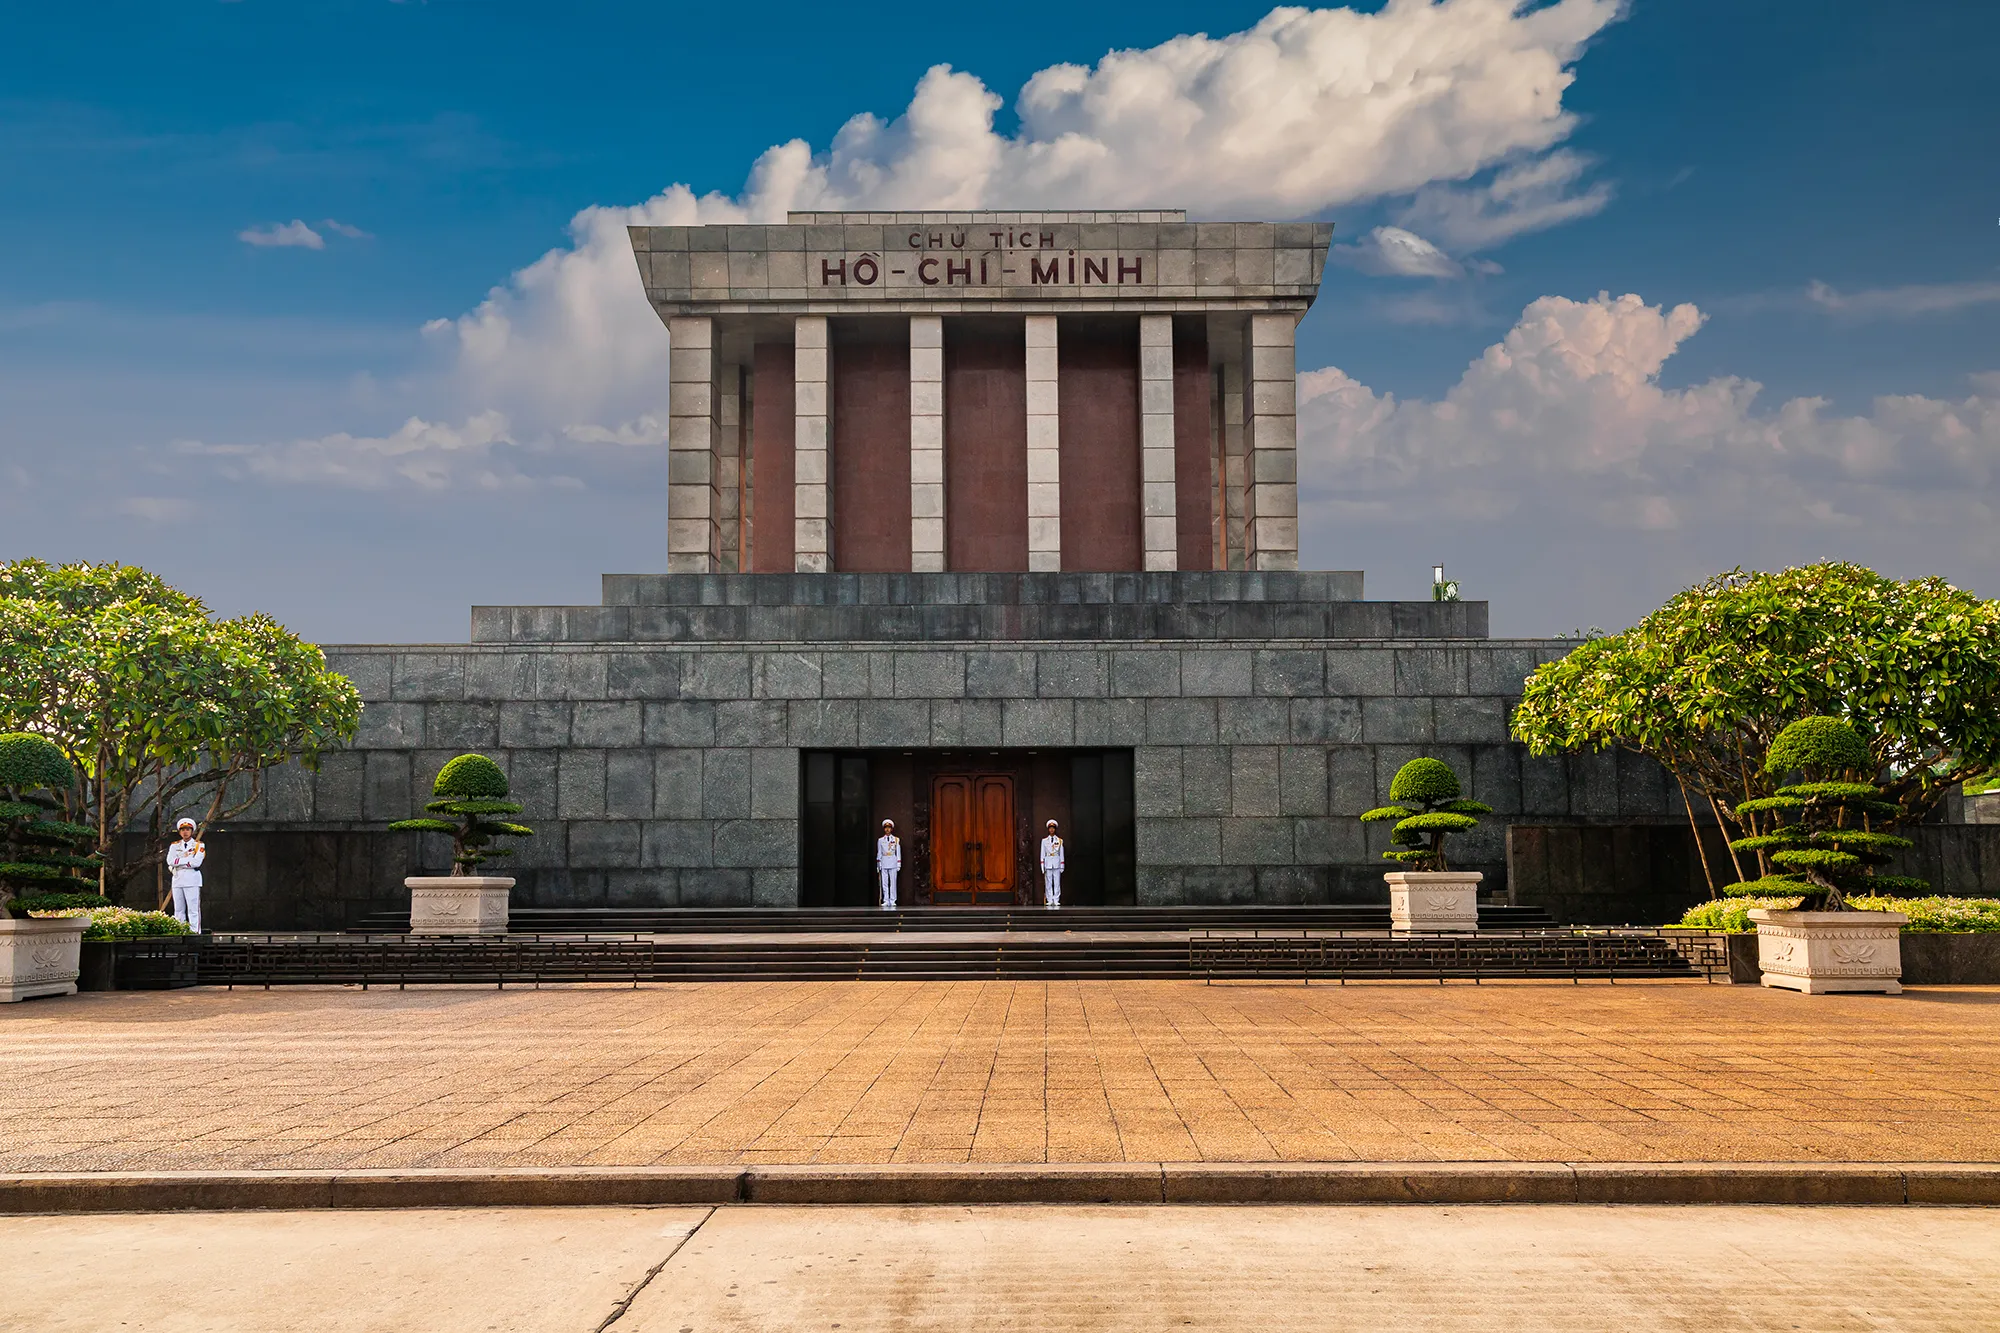 Ho Chi Minh Mausoleum In Hanoi Vietnam In A Summe 2021 08 26 19 00 17 Utc